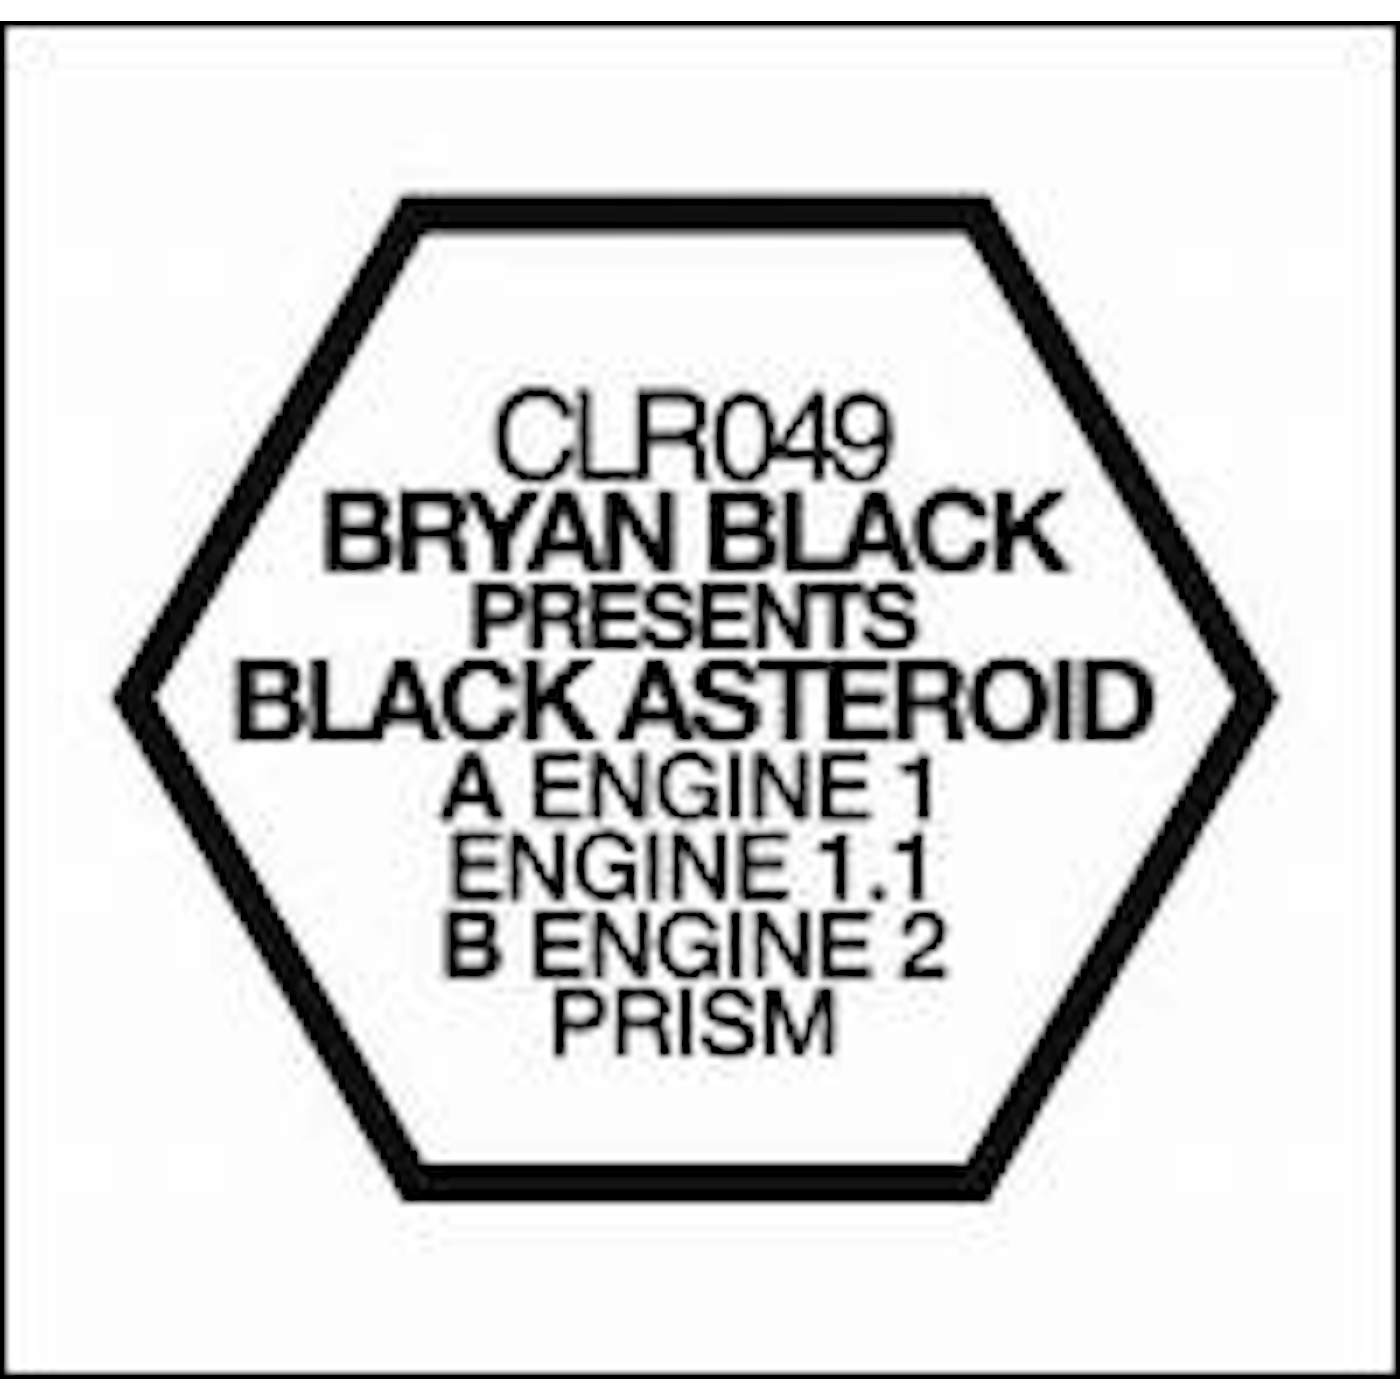 Bryan Black PRESENTS BLACK ASTEROID THE ENGINE Vinyl Record